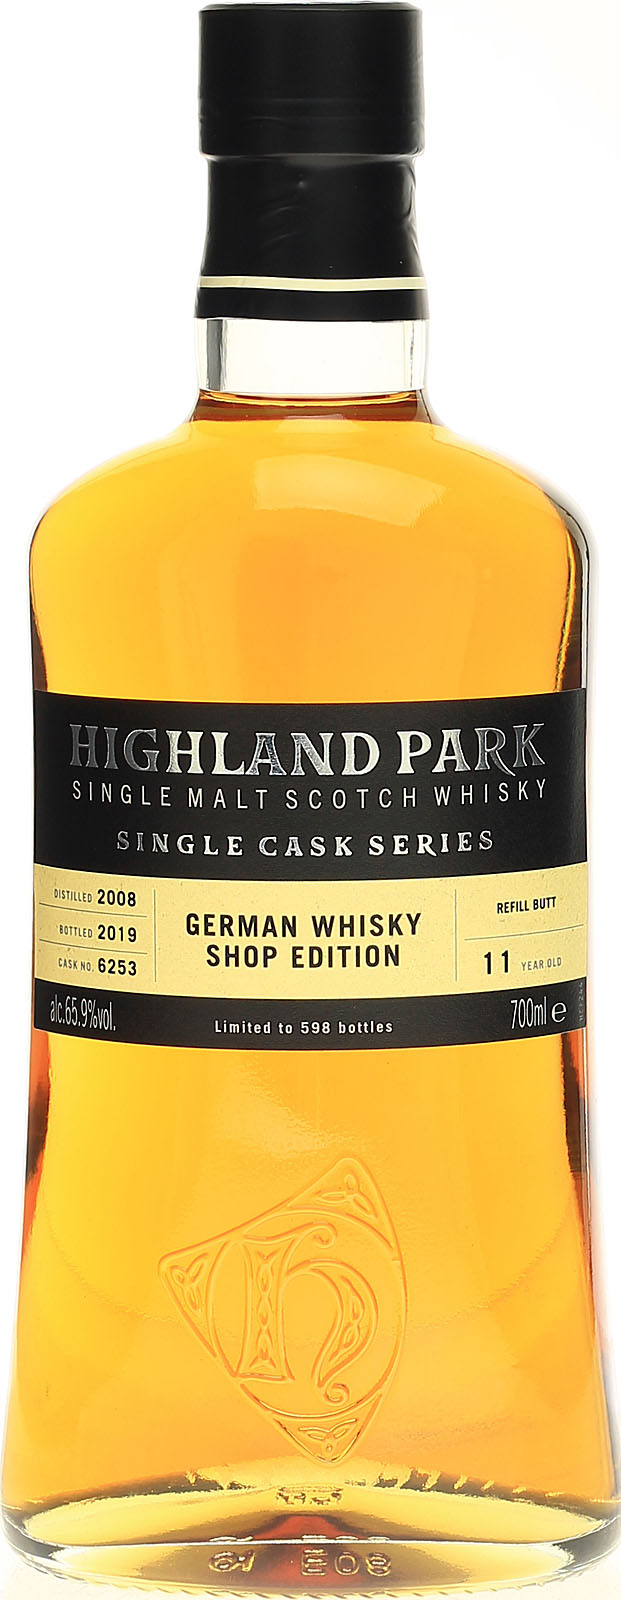 Highland Park Single Cask No. 6253 German Whisky Shop